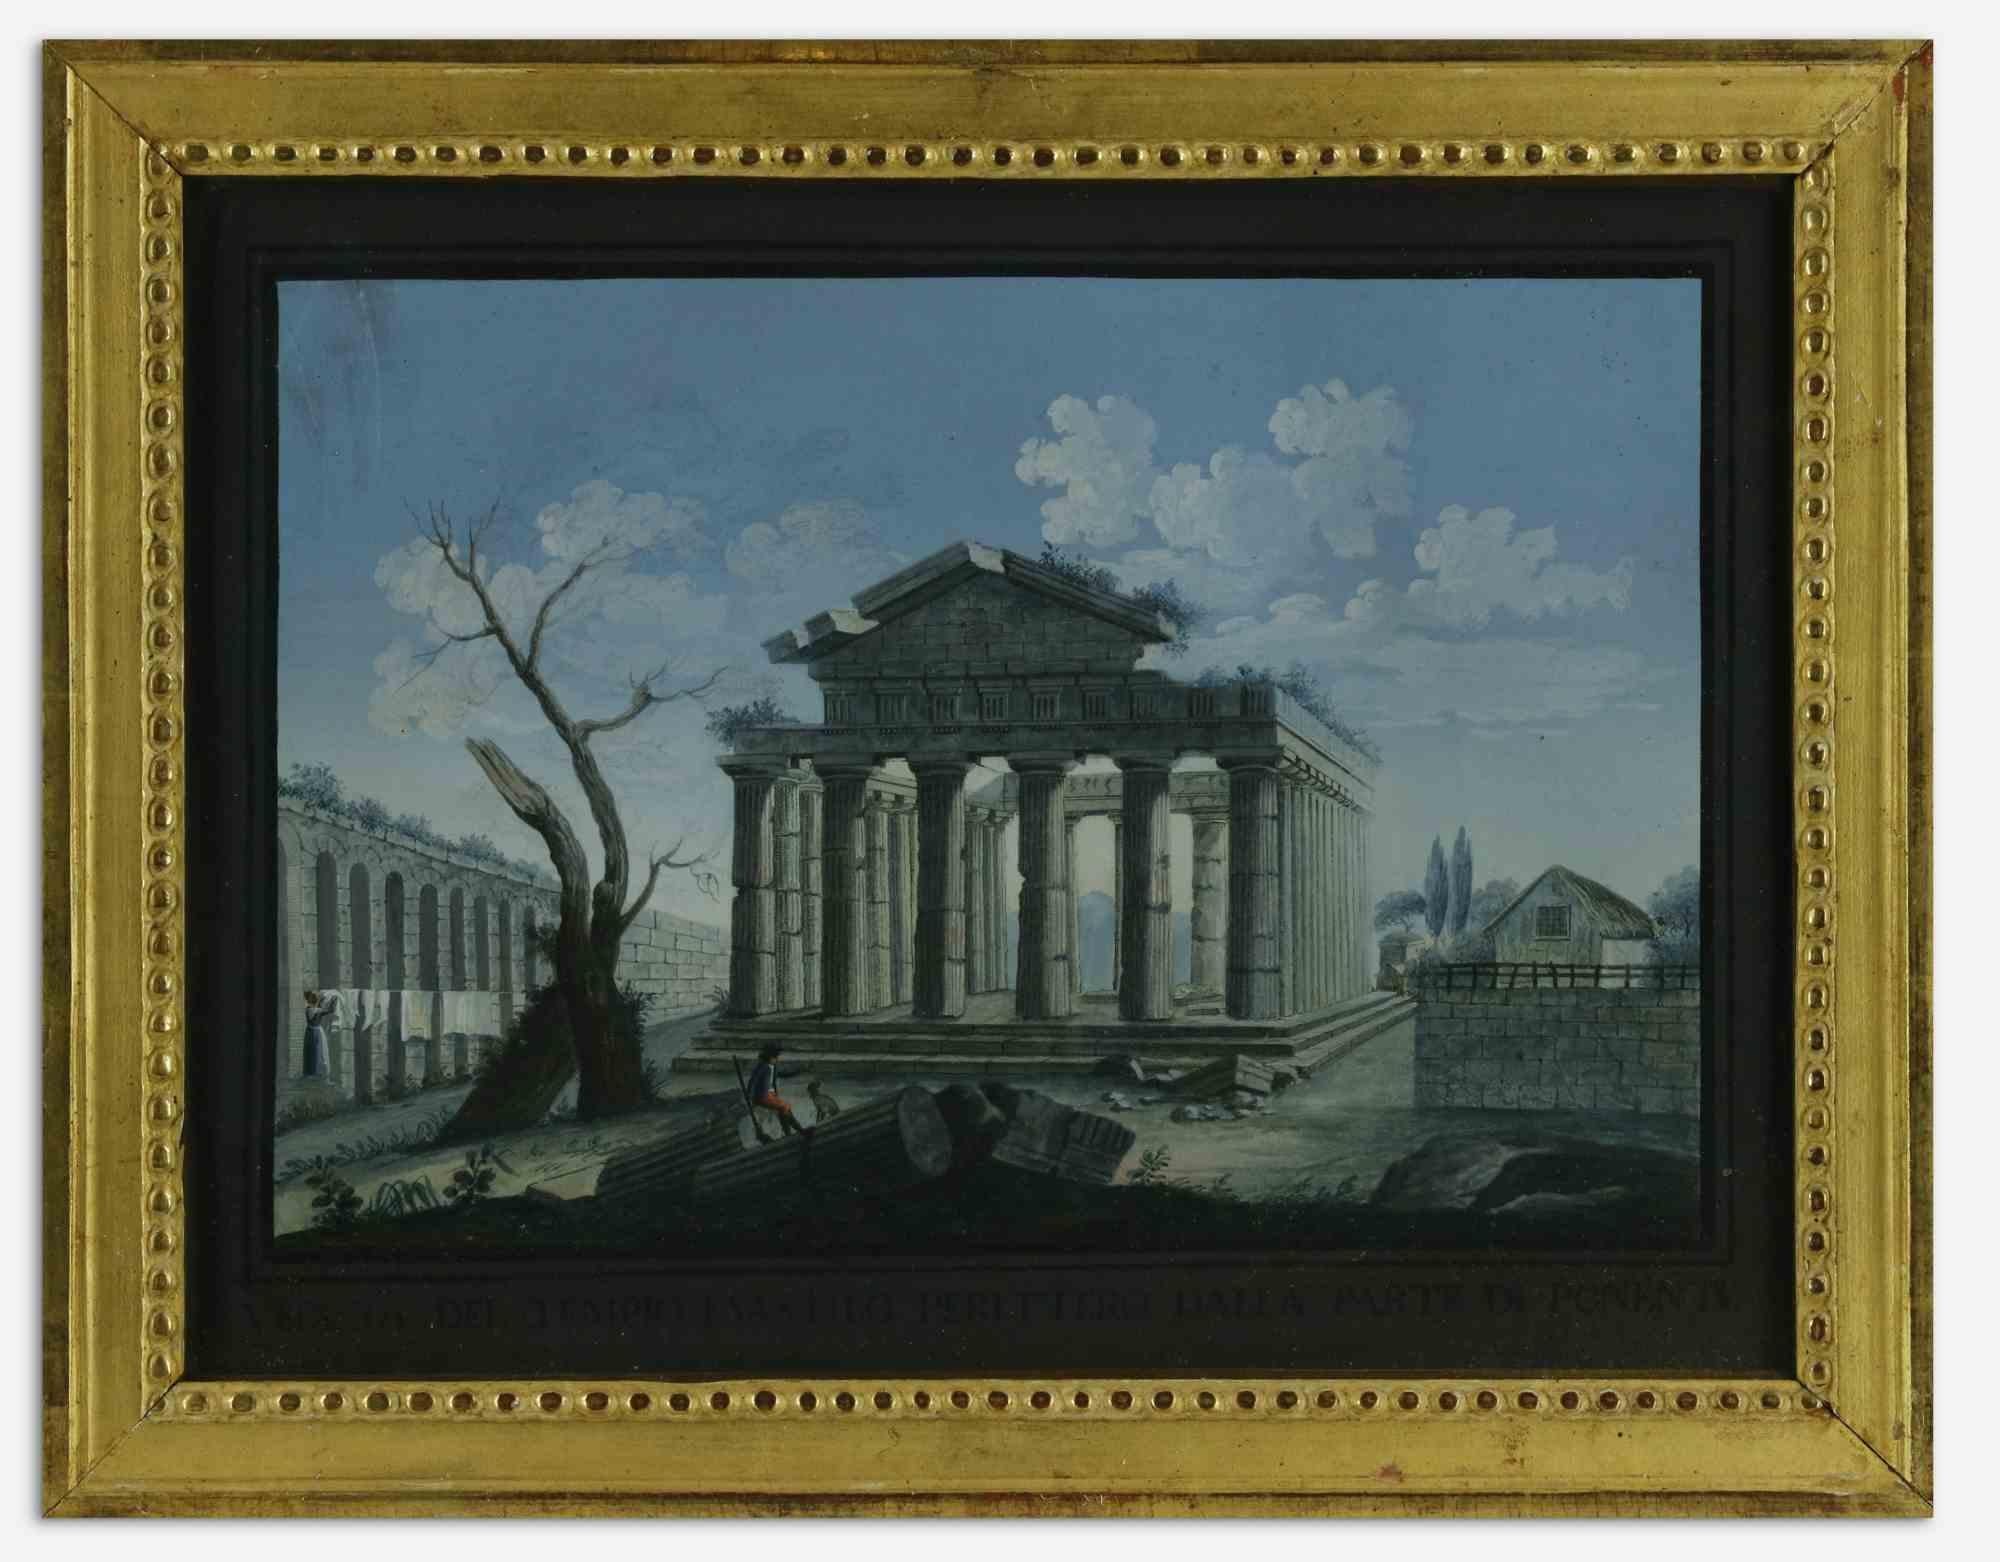 Unknown Landscape Painting – The Valley of the Temples – Gemischte, farbige Tempera auf Leinwand – Mitte des 19. Jahrhunderts